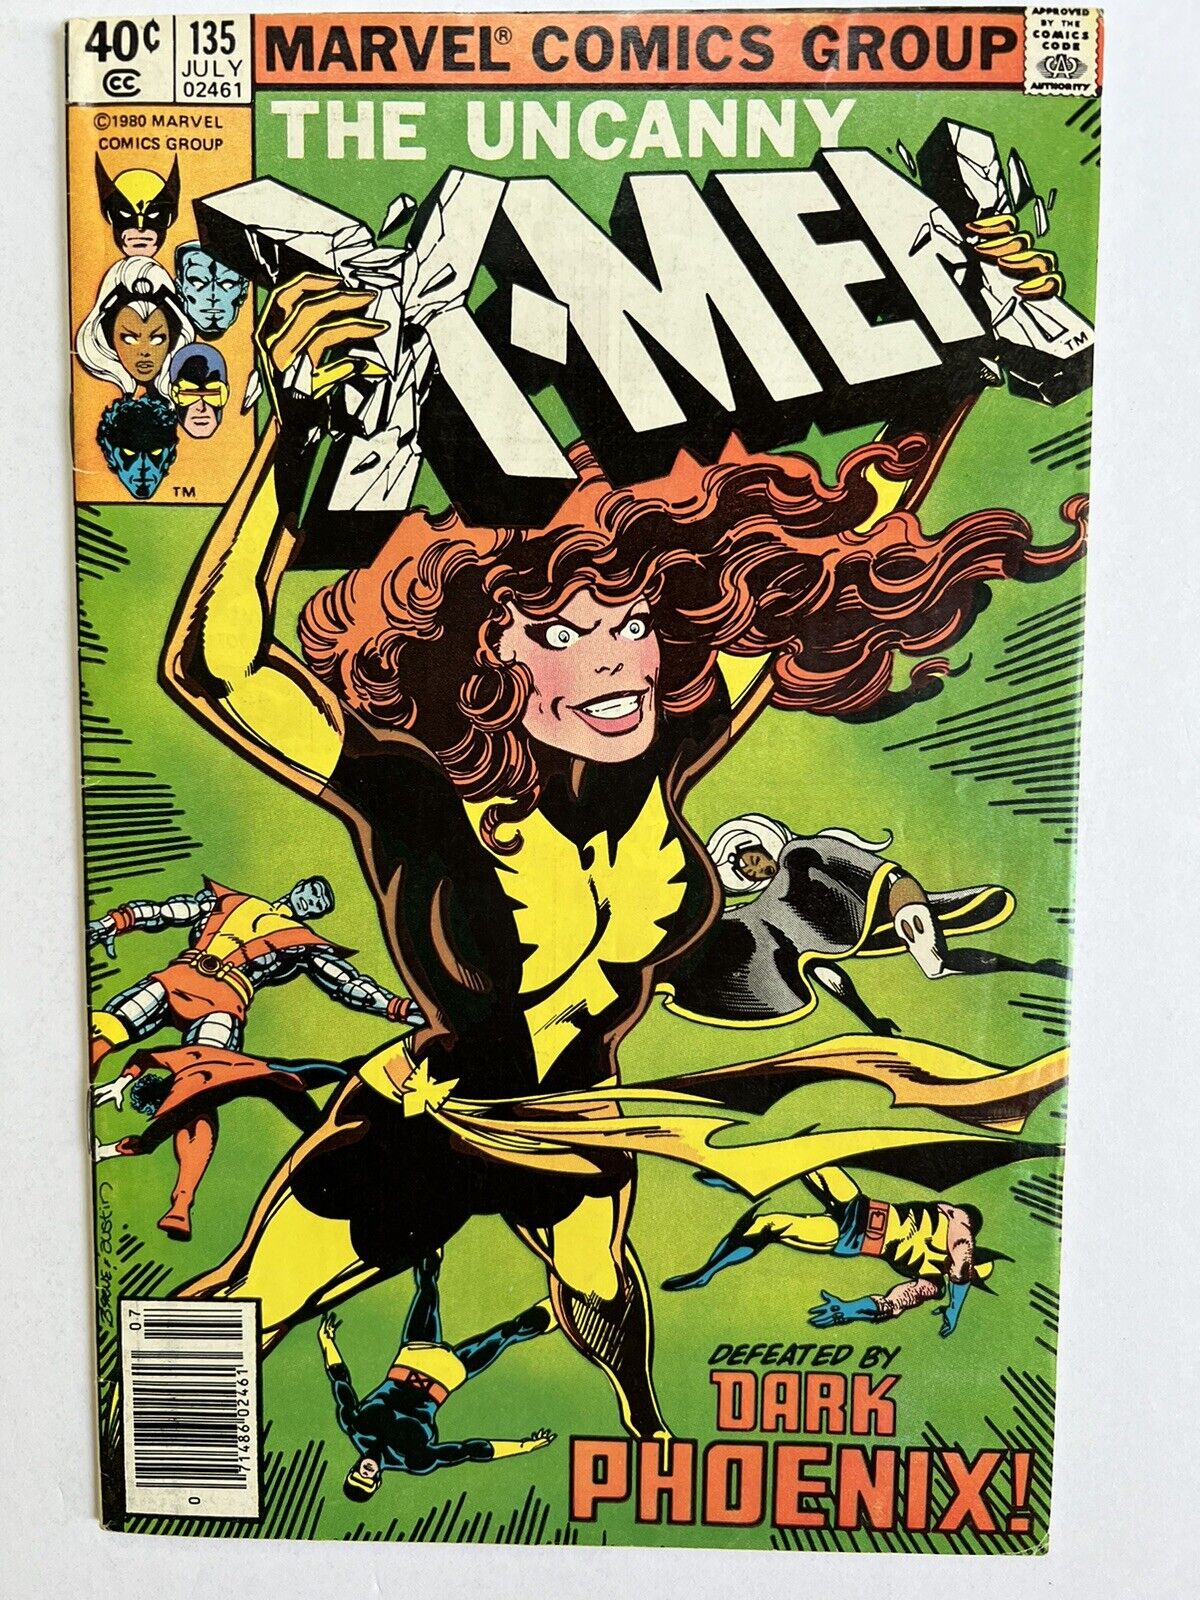 Uncanny X-Men # 135 - 1980 - NEWSSTAND • 2nd app Jean Grey as Dark Phoenix